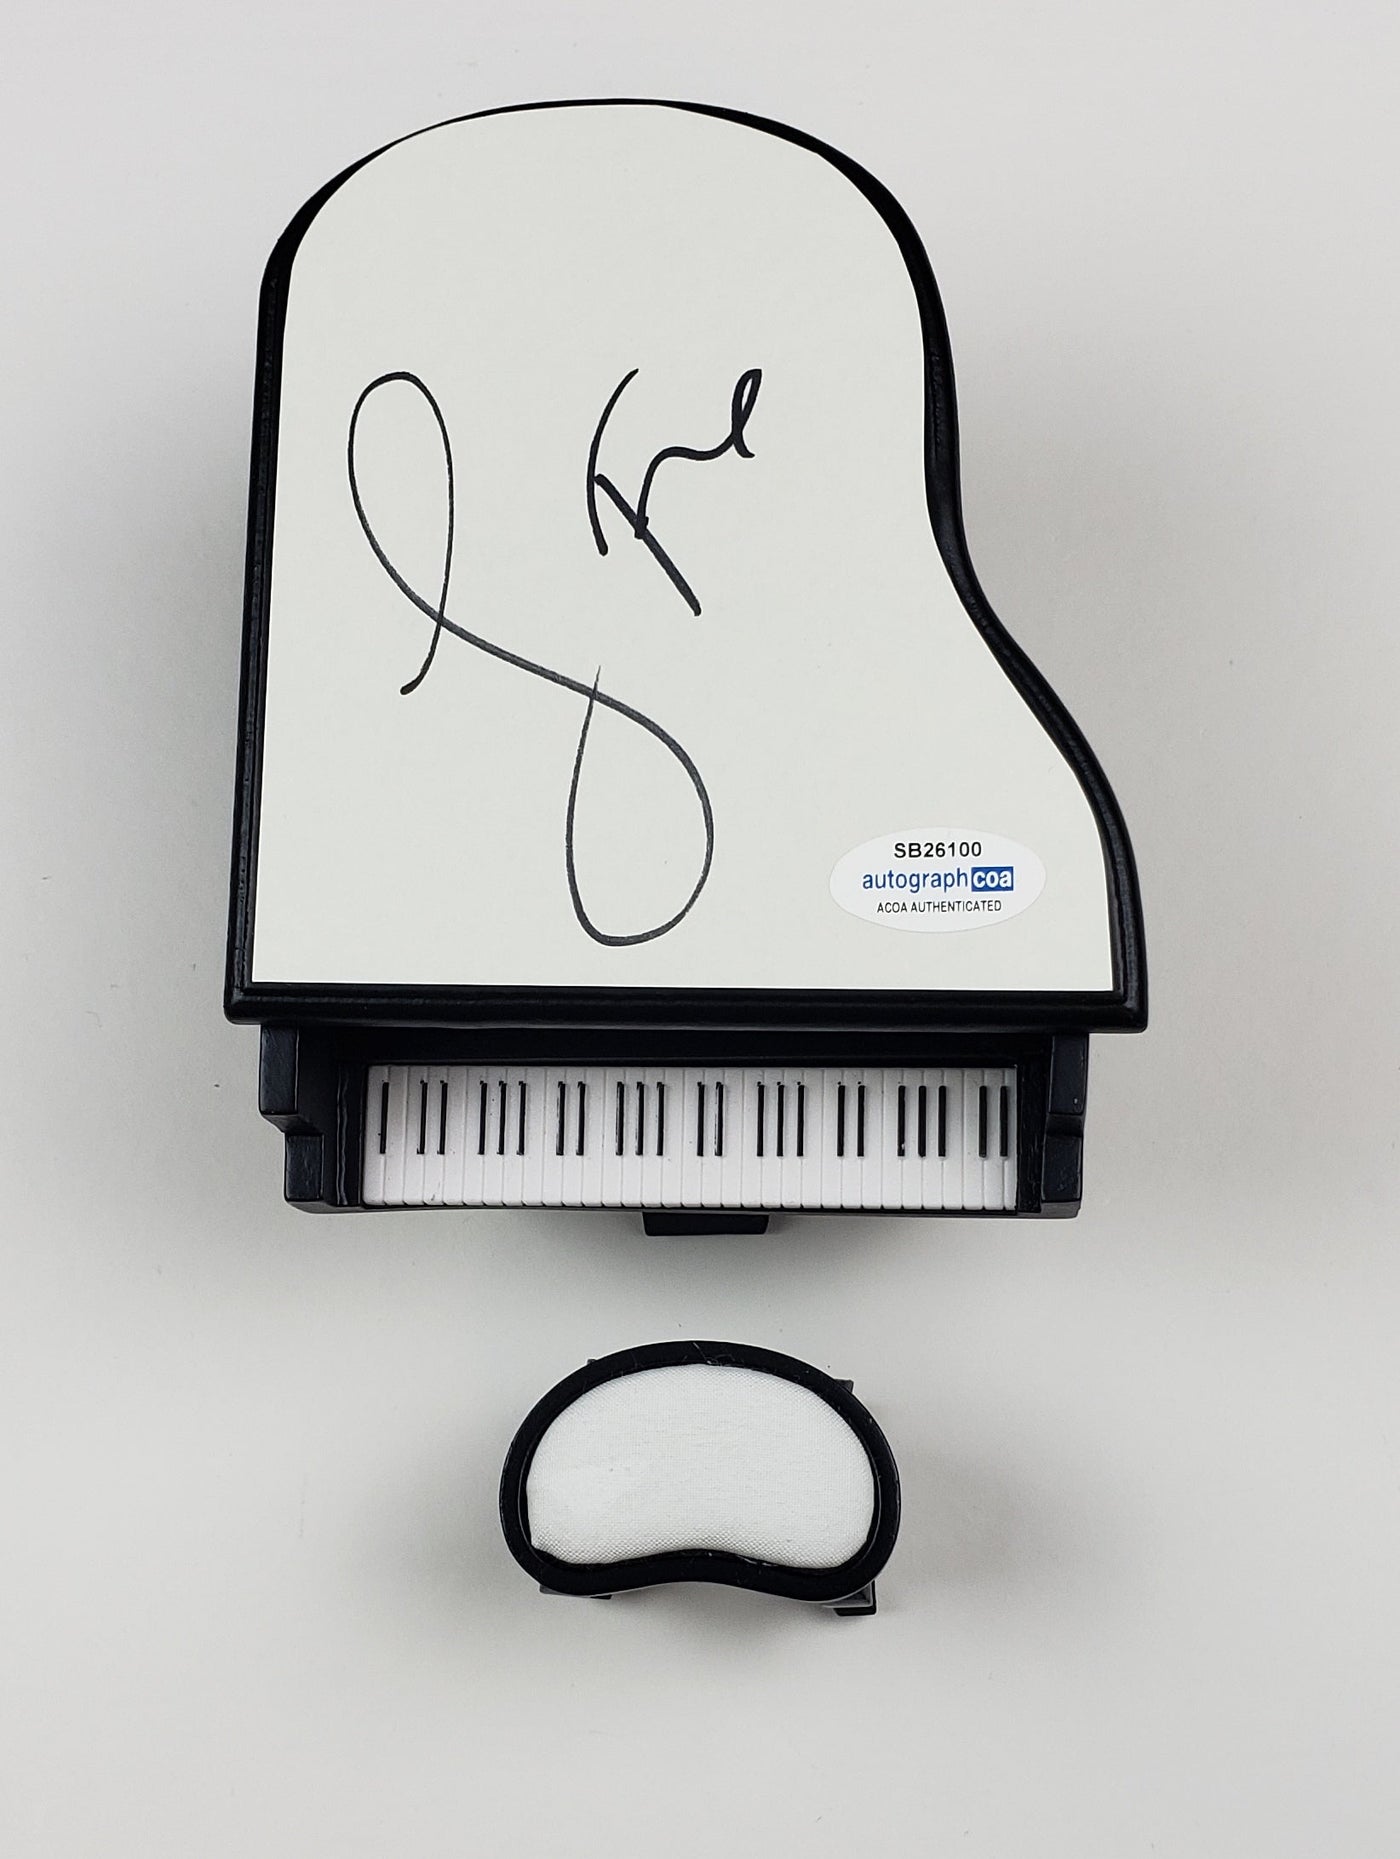 Jamie Foxx Autographed Signed Custom Toy Mini Piano Ray Charles Soul ACOA